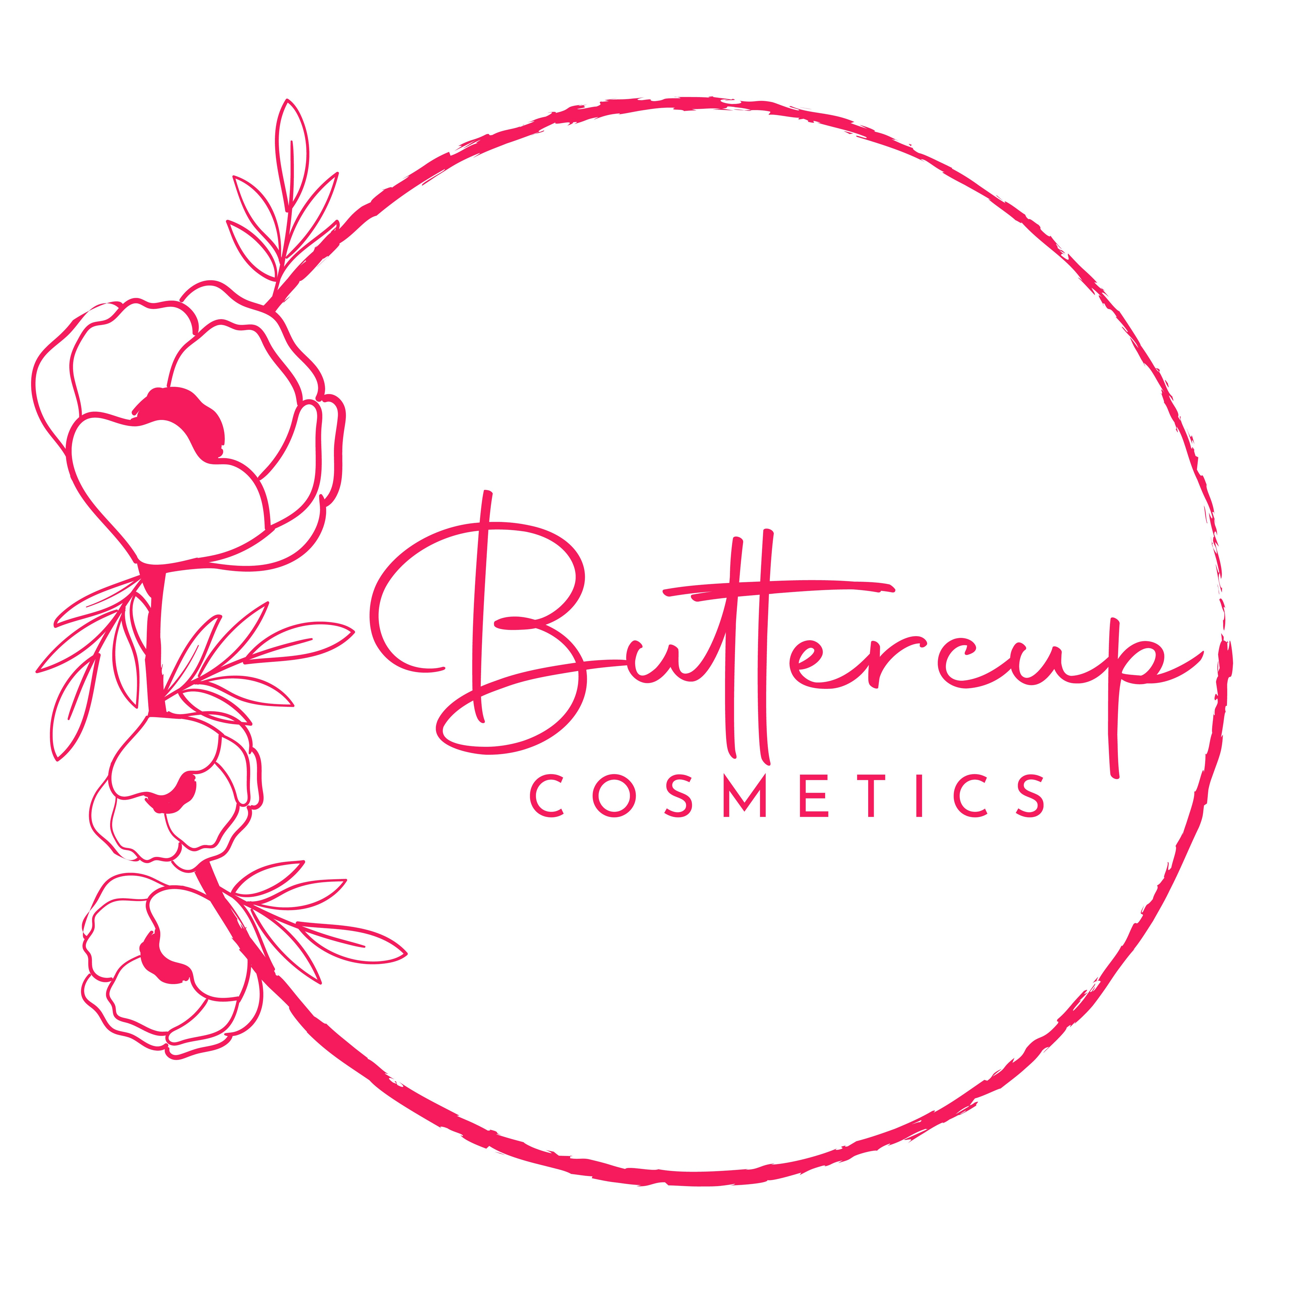 Buttercup Cosmetics